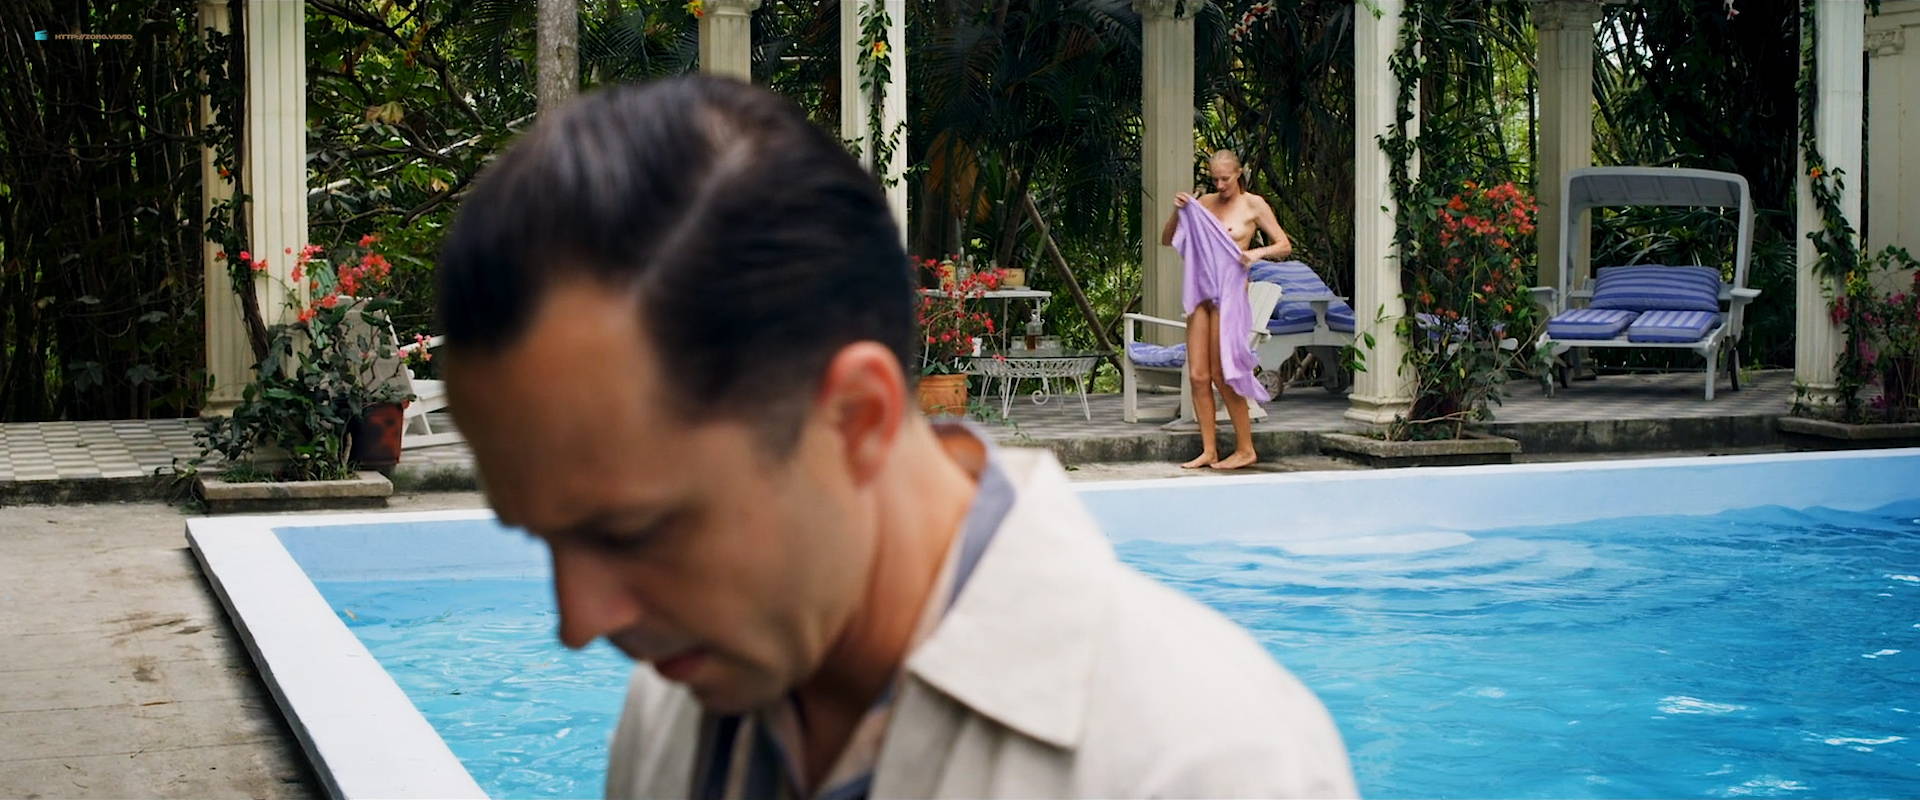 Minka Kelly nude butt Joely Richardson nude and skinny dipping - Papa Hemingway in Cuba (2015) HD 1080p web (10)